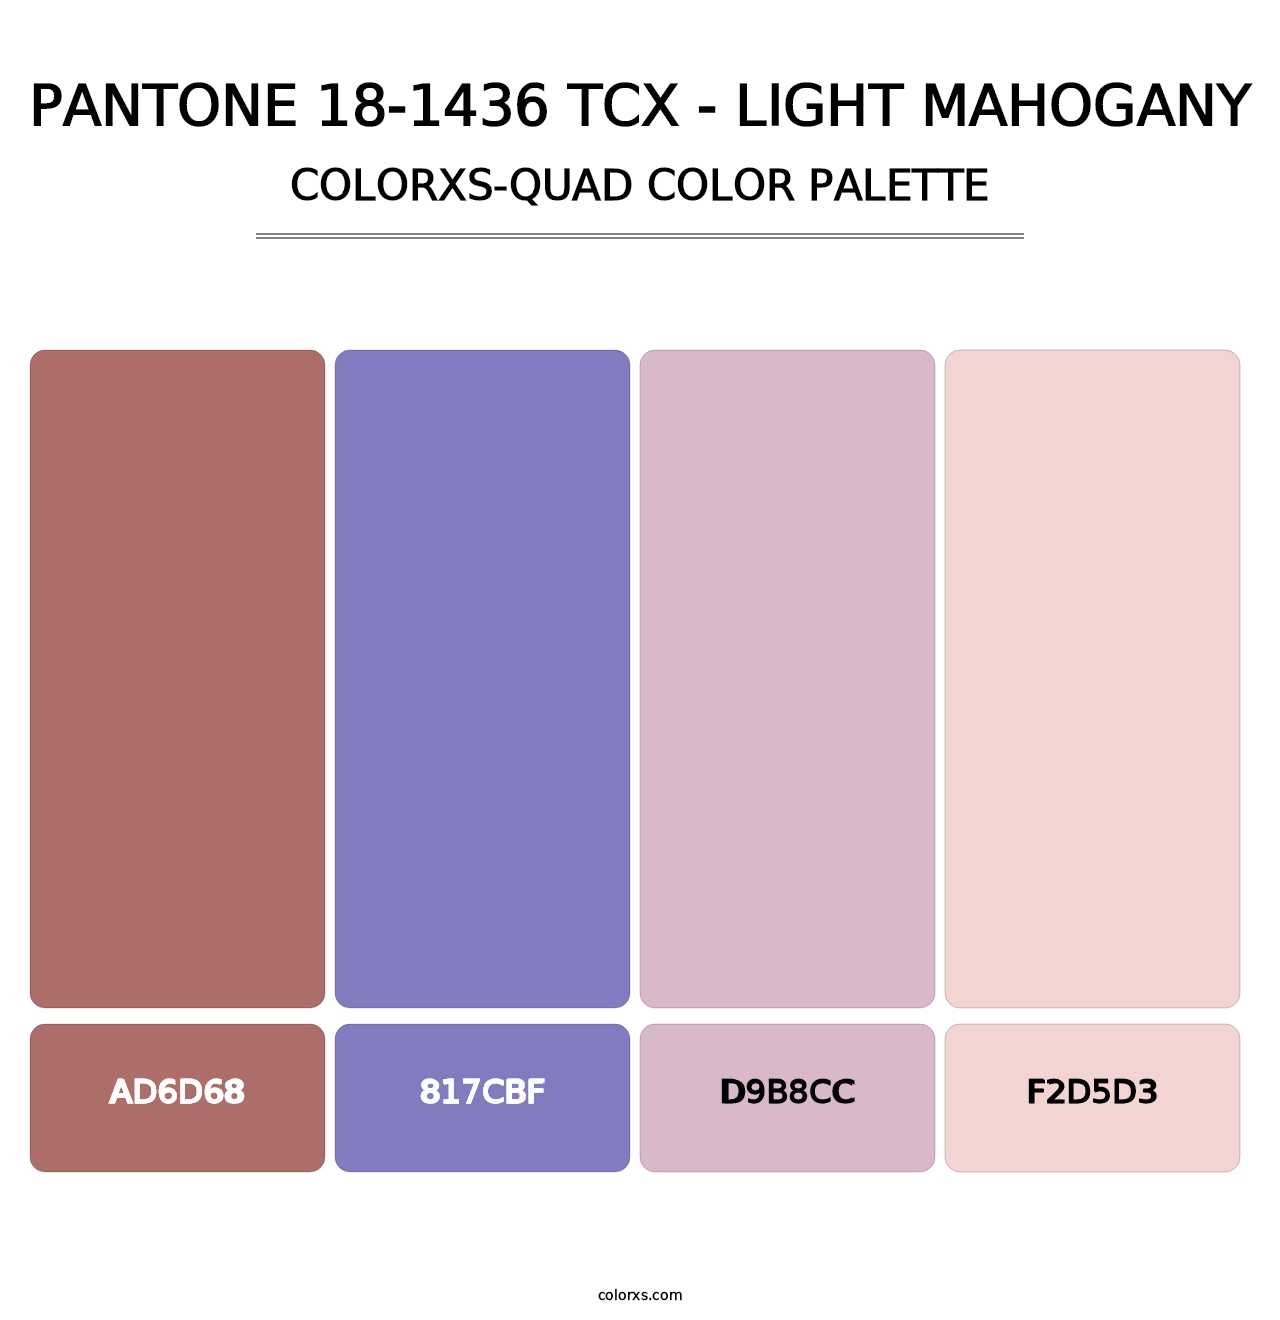 PANTONE 18-1436 TCX - Light Mahogany - Colorxs Quad Palette